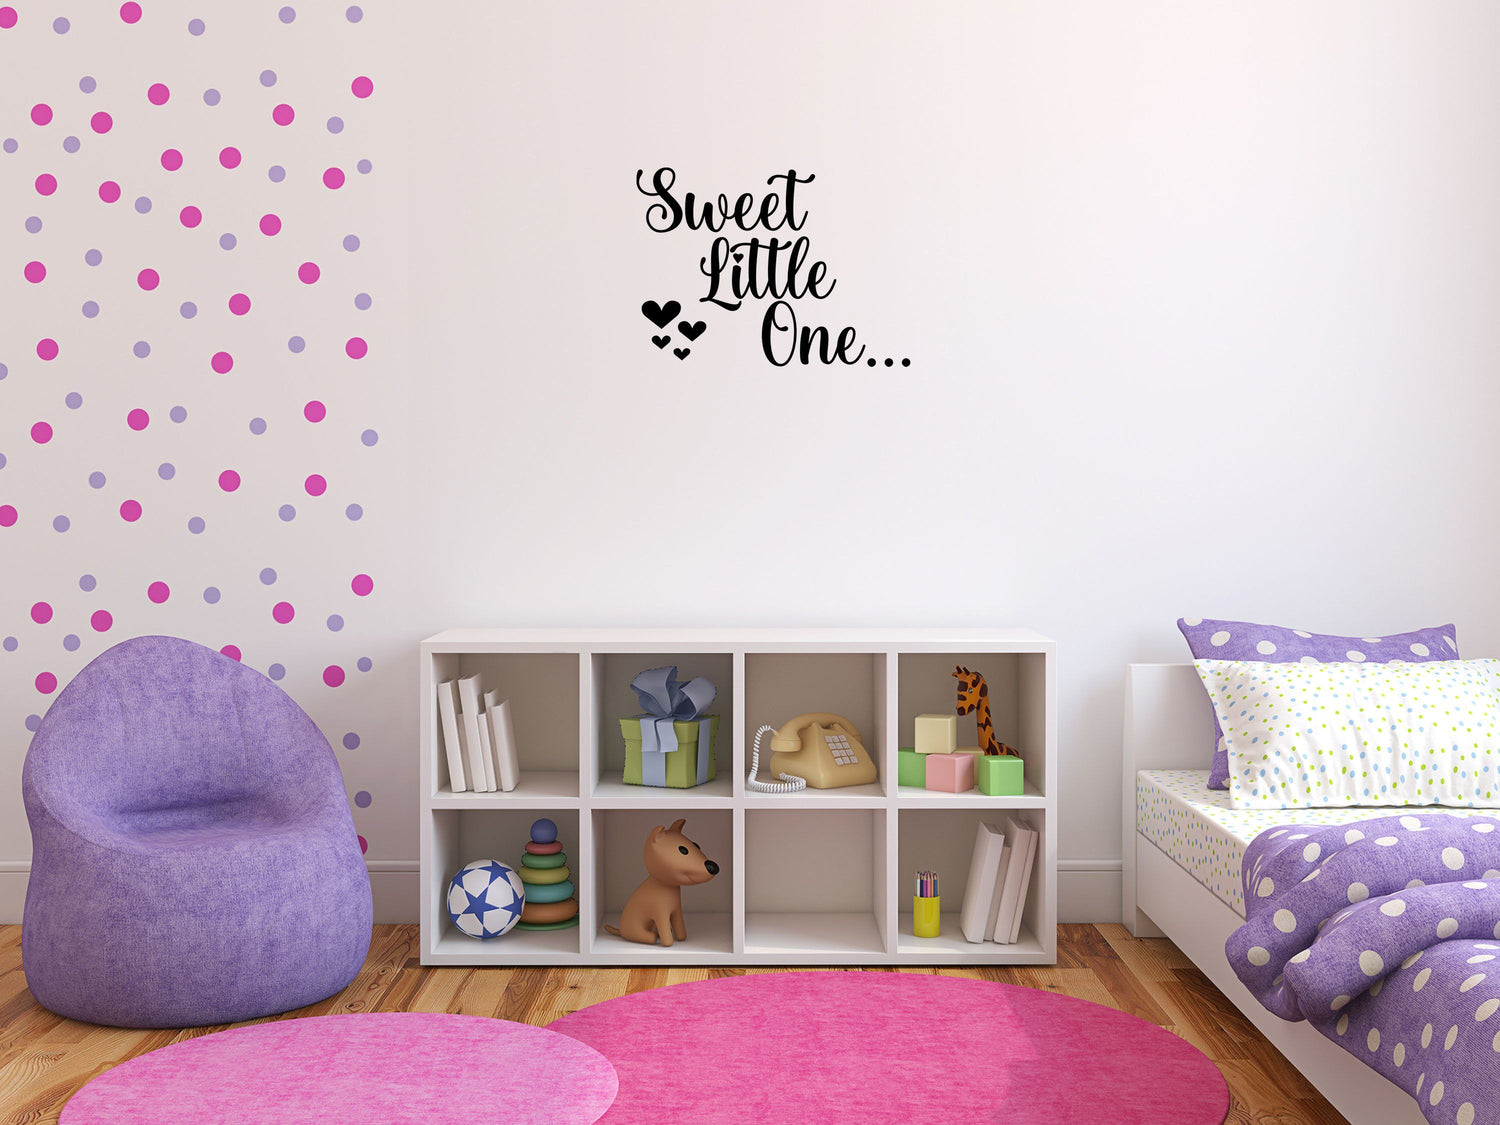 Sweet Little One Decal - Nursery Wall Art - Sweet Little One Wall Sign - Baby Wall Decal - Cute Nursery Decal Vinyl Wall Decal Done 